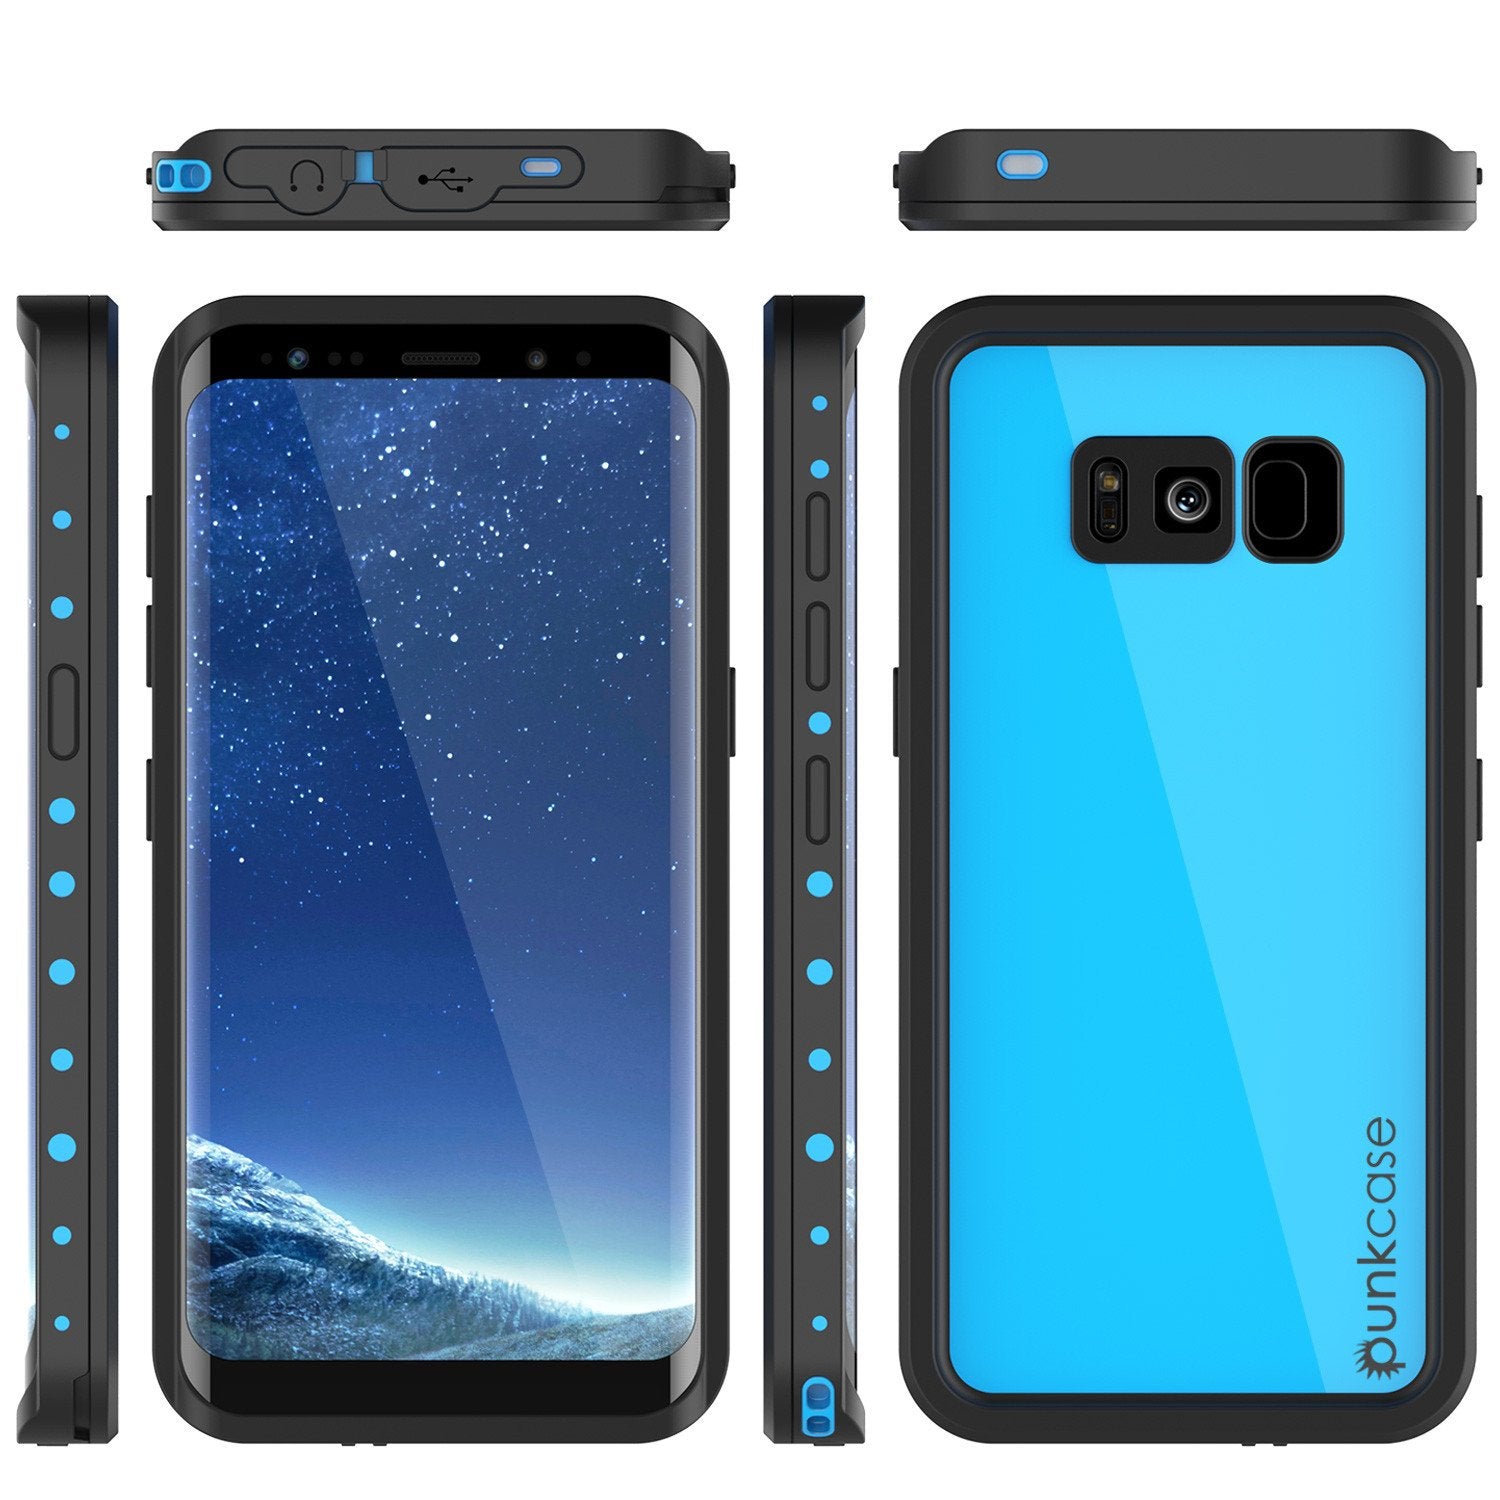 Galaxy S8 Plus Waterproof Case PunkCase StudStar Light Blue Thin 6.6ft Underwater IP68 ShockProof - PunkCase NZ